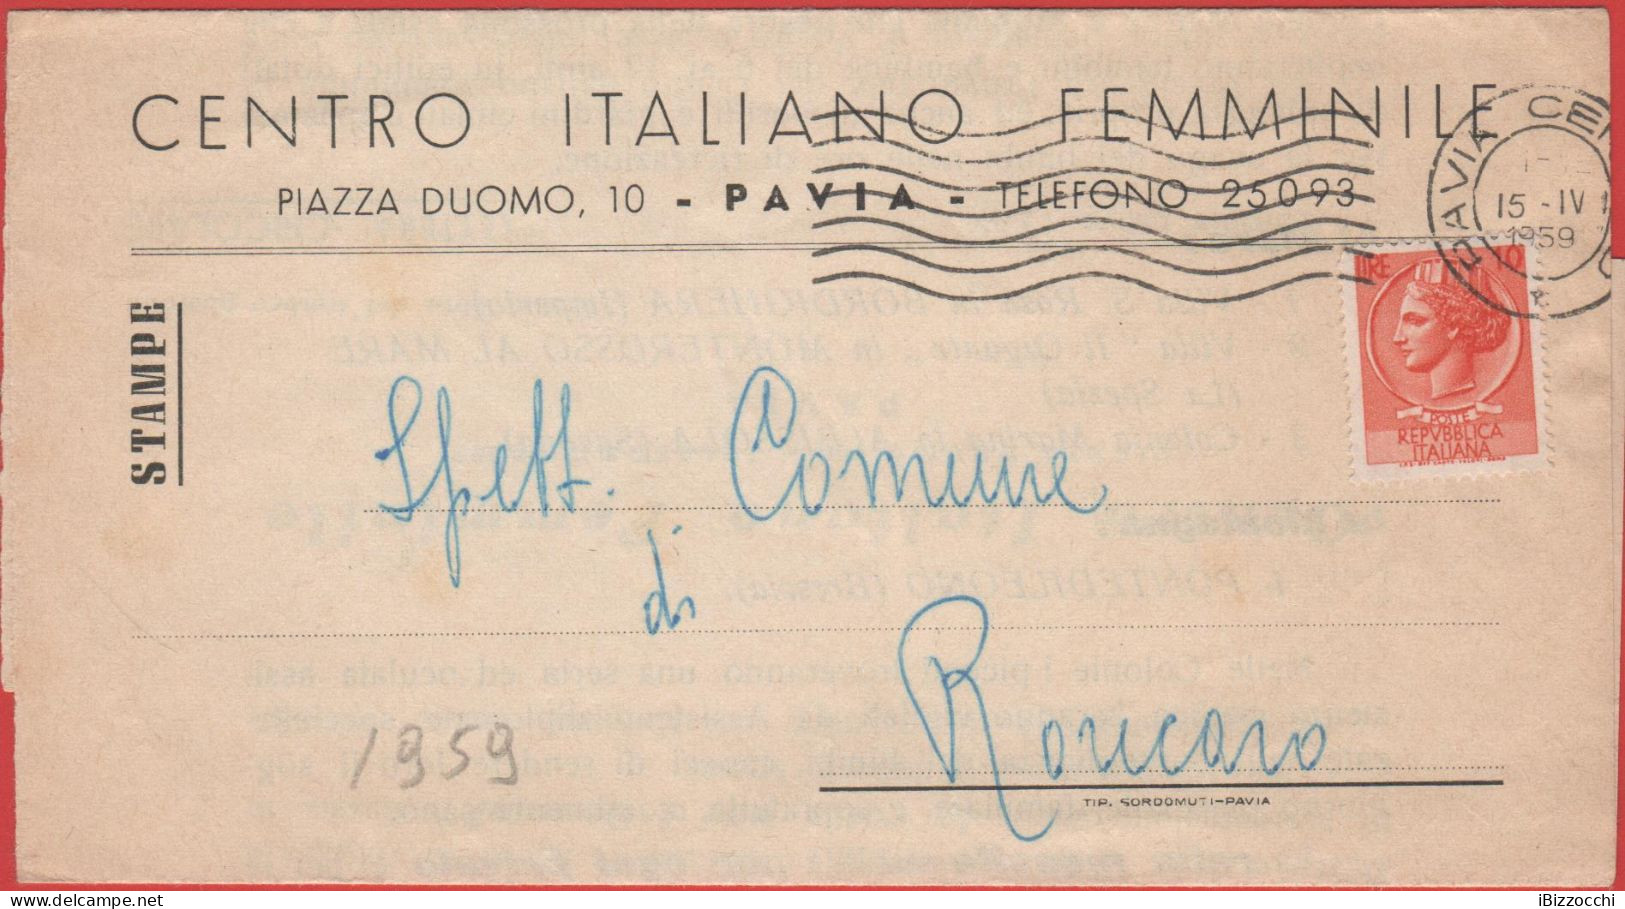 ITALIA - Storia Postale Repubblica - 1959 - 10 Antica Moneta Siracusana (isolato) - STAMPE - Centro Italiano Femminile - - 1946-60: Marcophilia